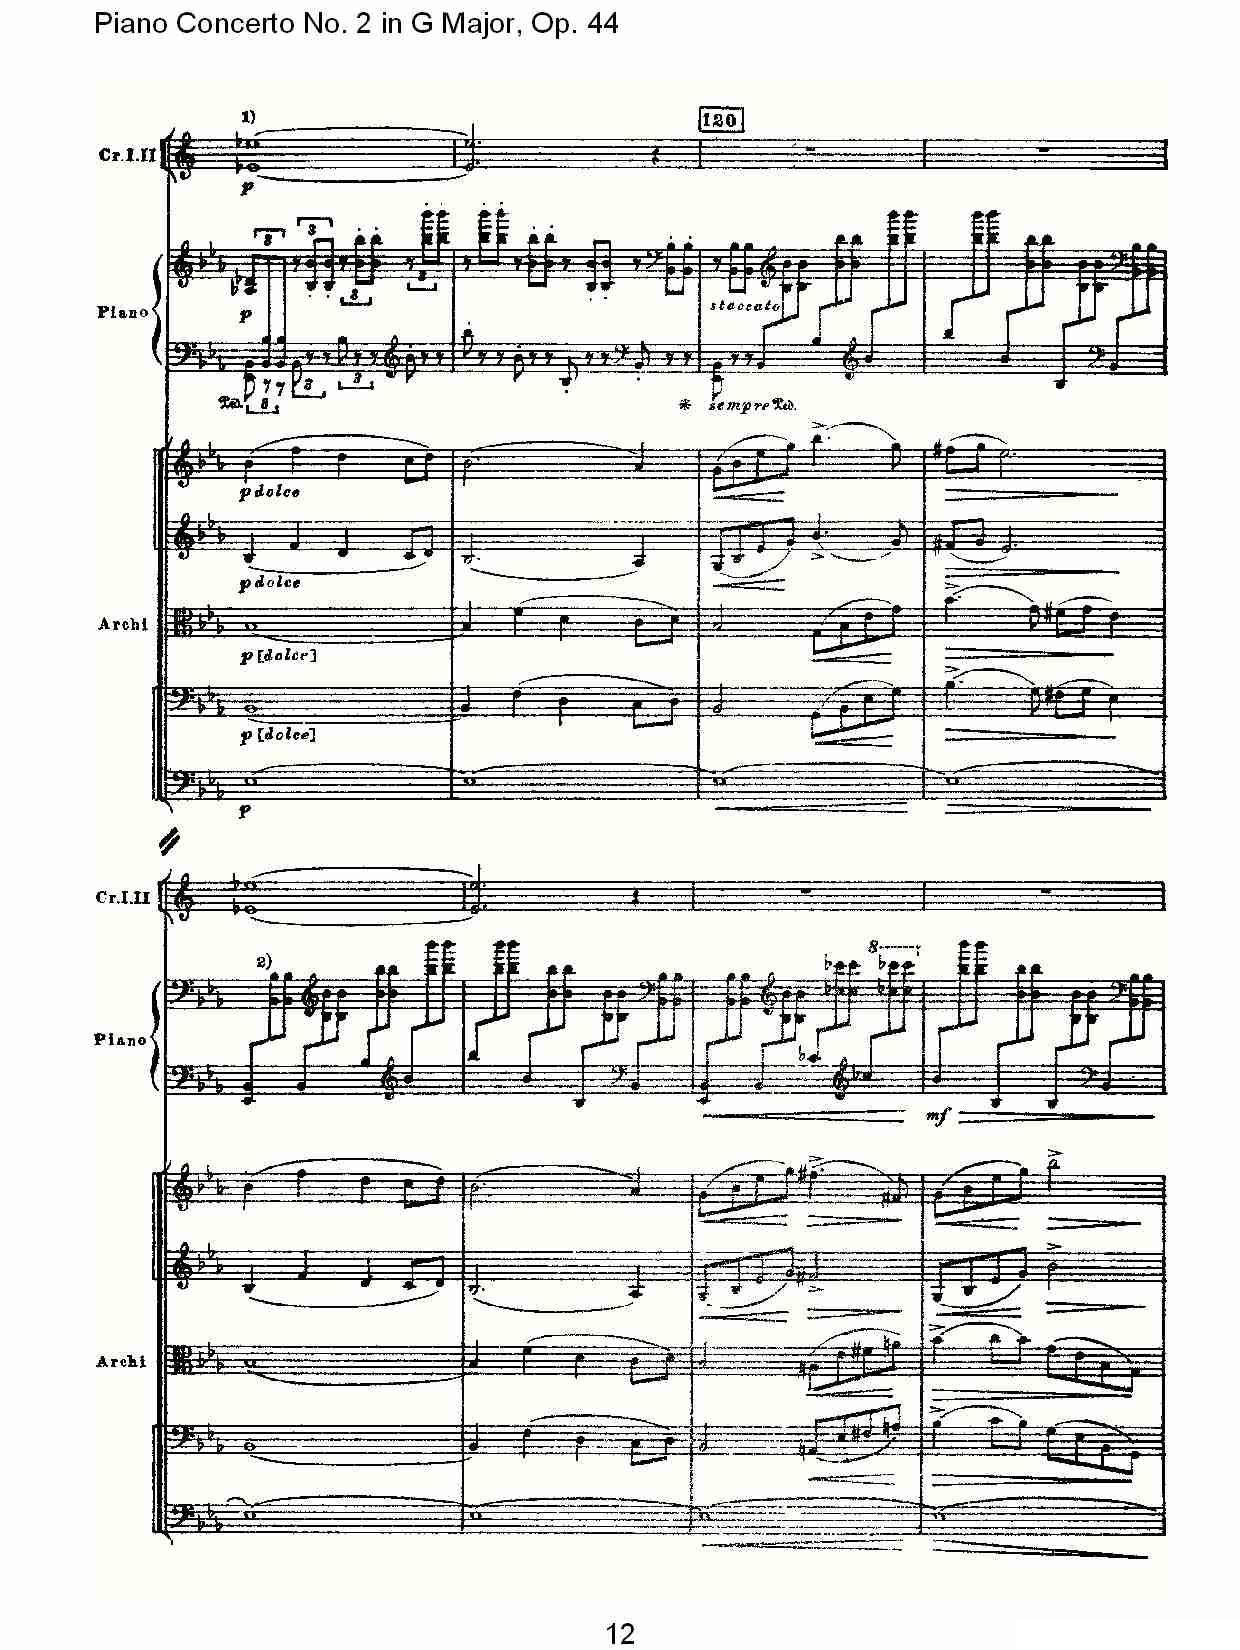 G大调第二钢琴协奏曲, Op.44第一乐章（一）钢琴曲谱（图12）